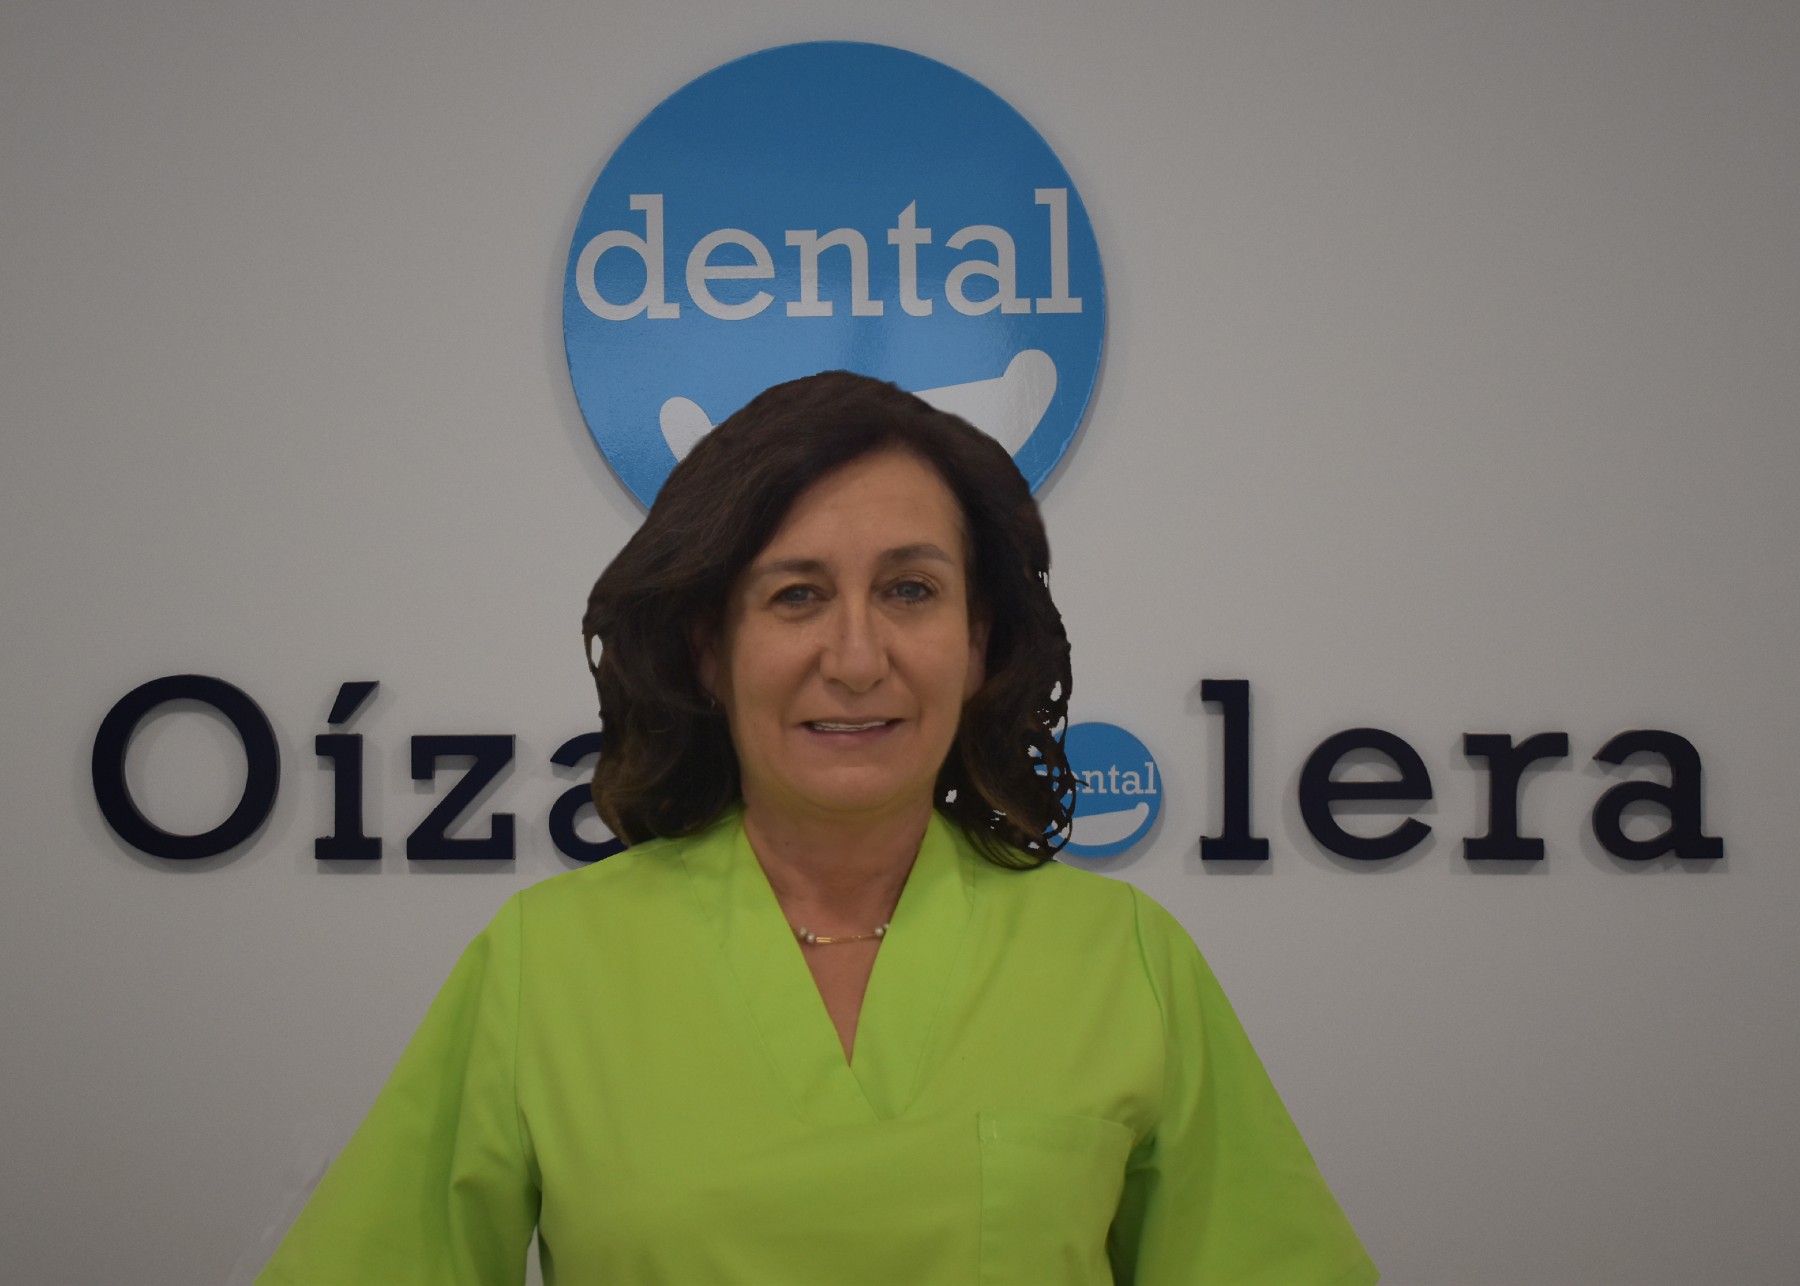 Pilar of Oíza-Colera Dental Clinic